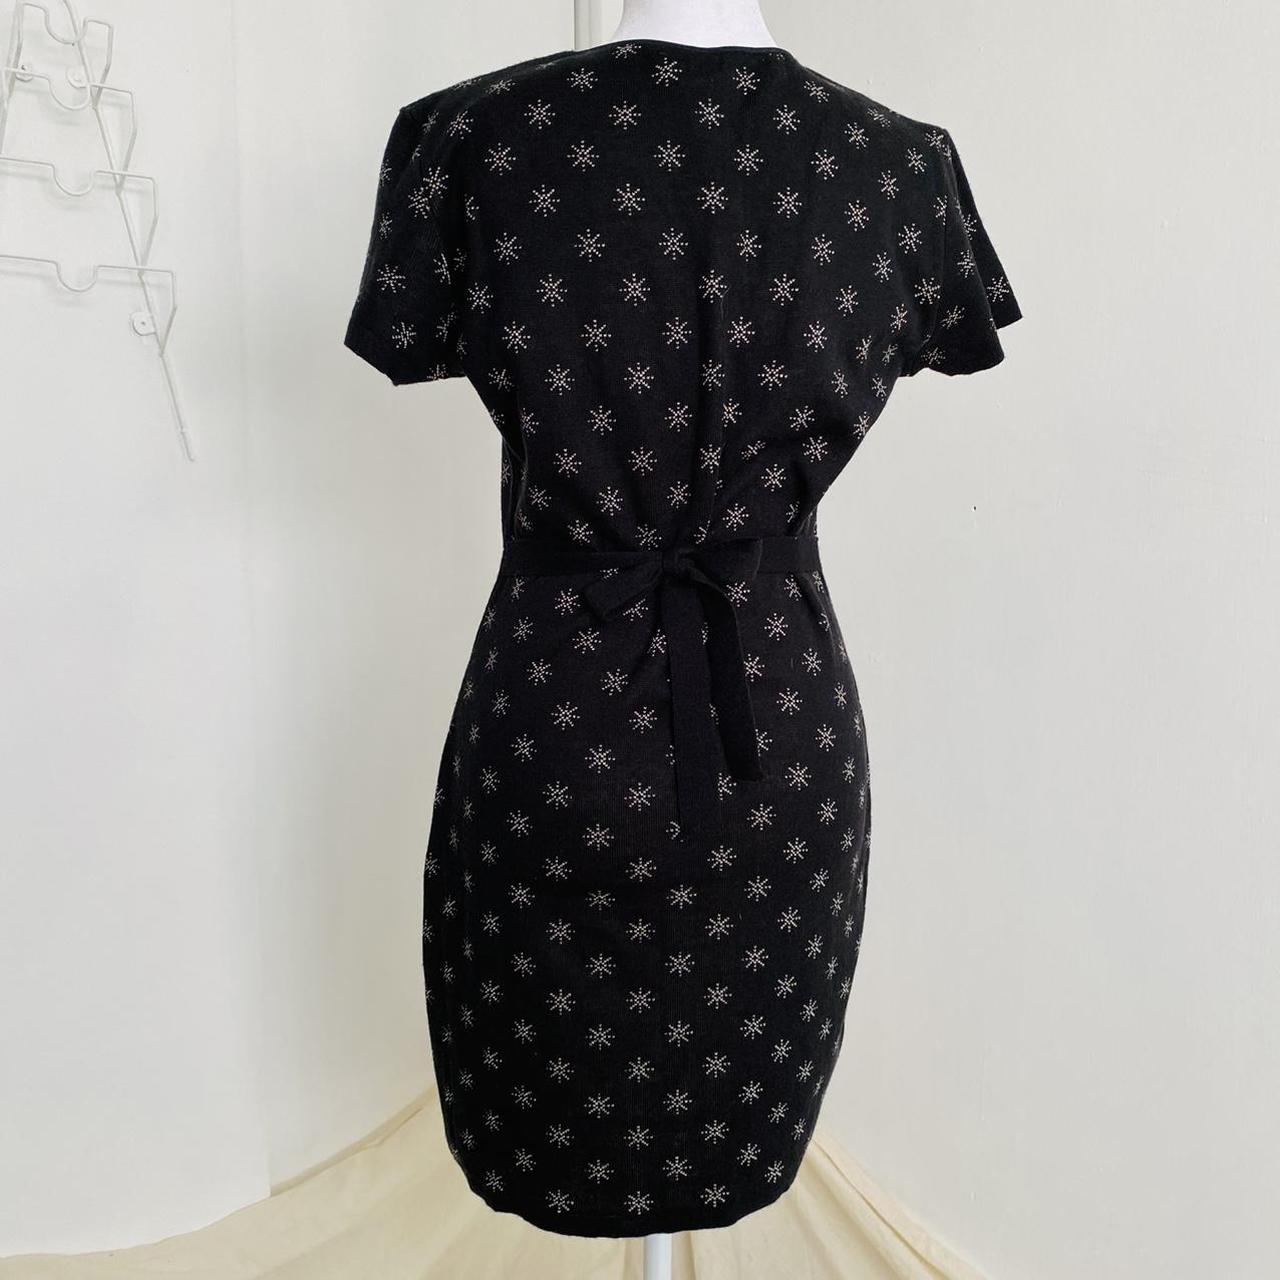 KOOKAÏ Women's Cream and Black Dress (3)